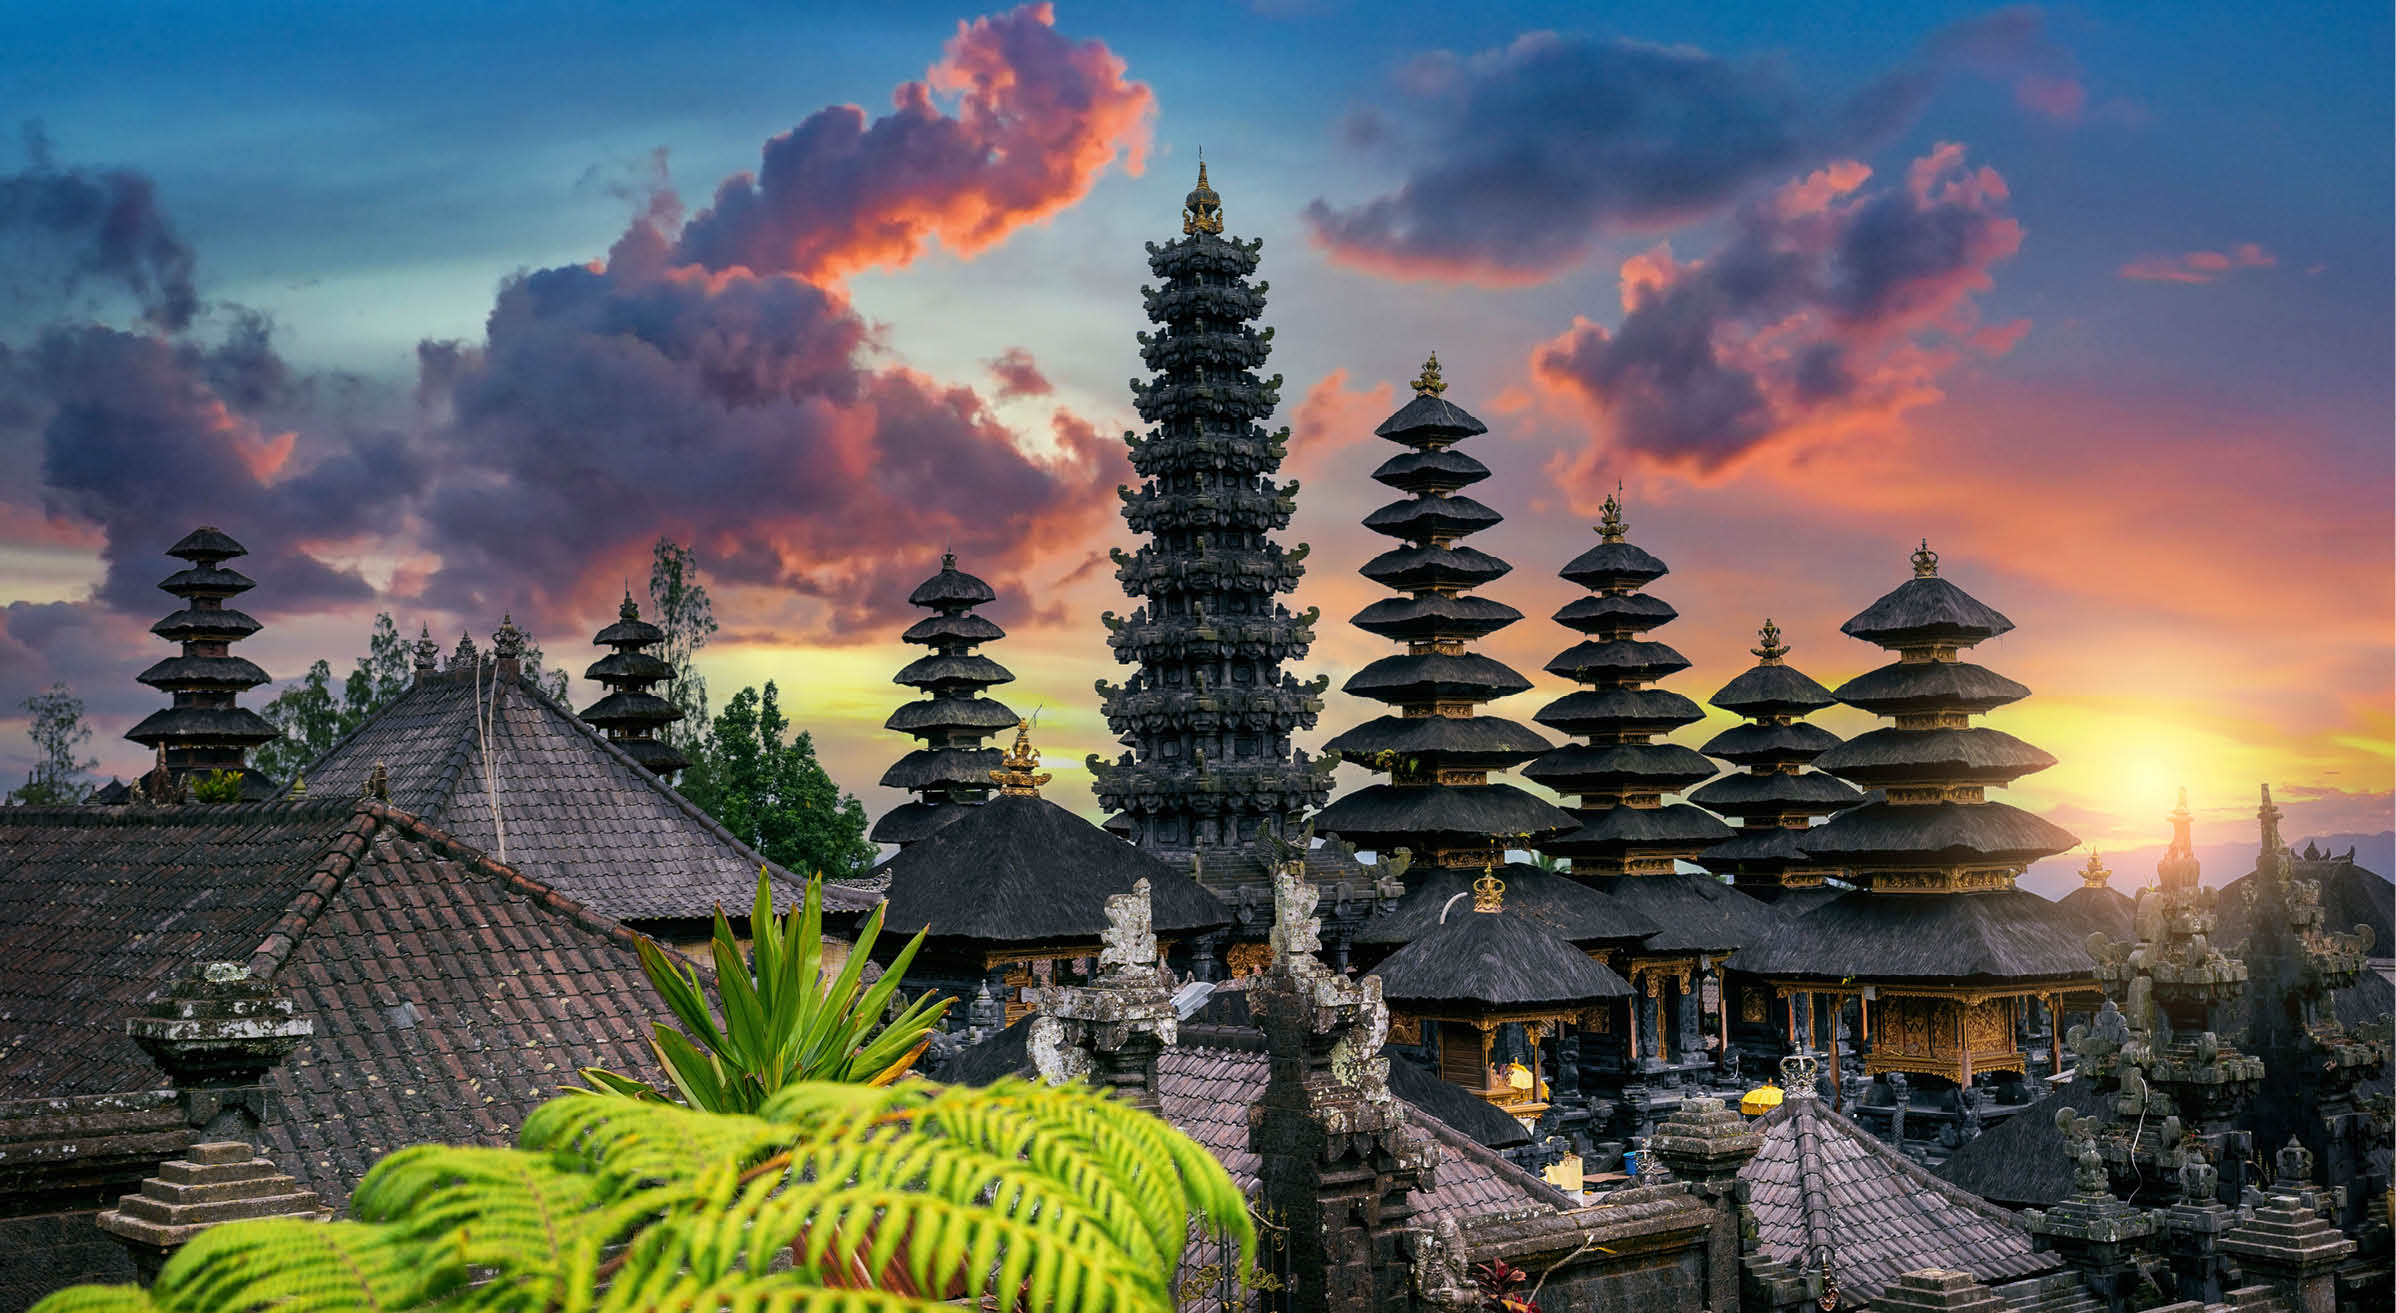 Besakih temple at sunset in Bali, Indonesia.